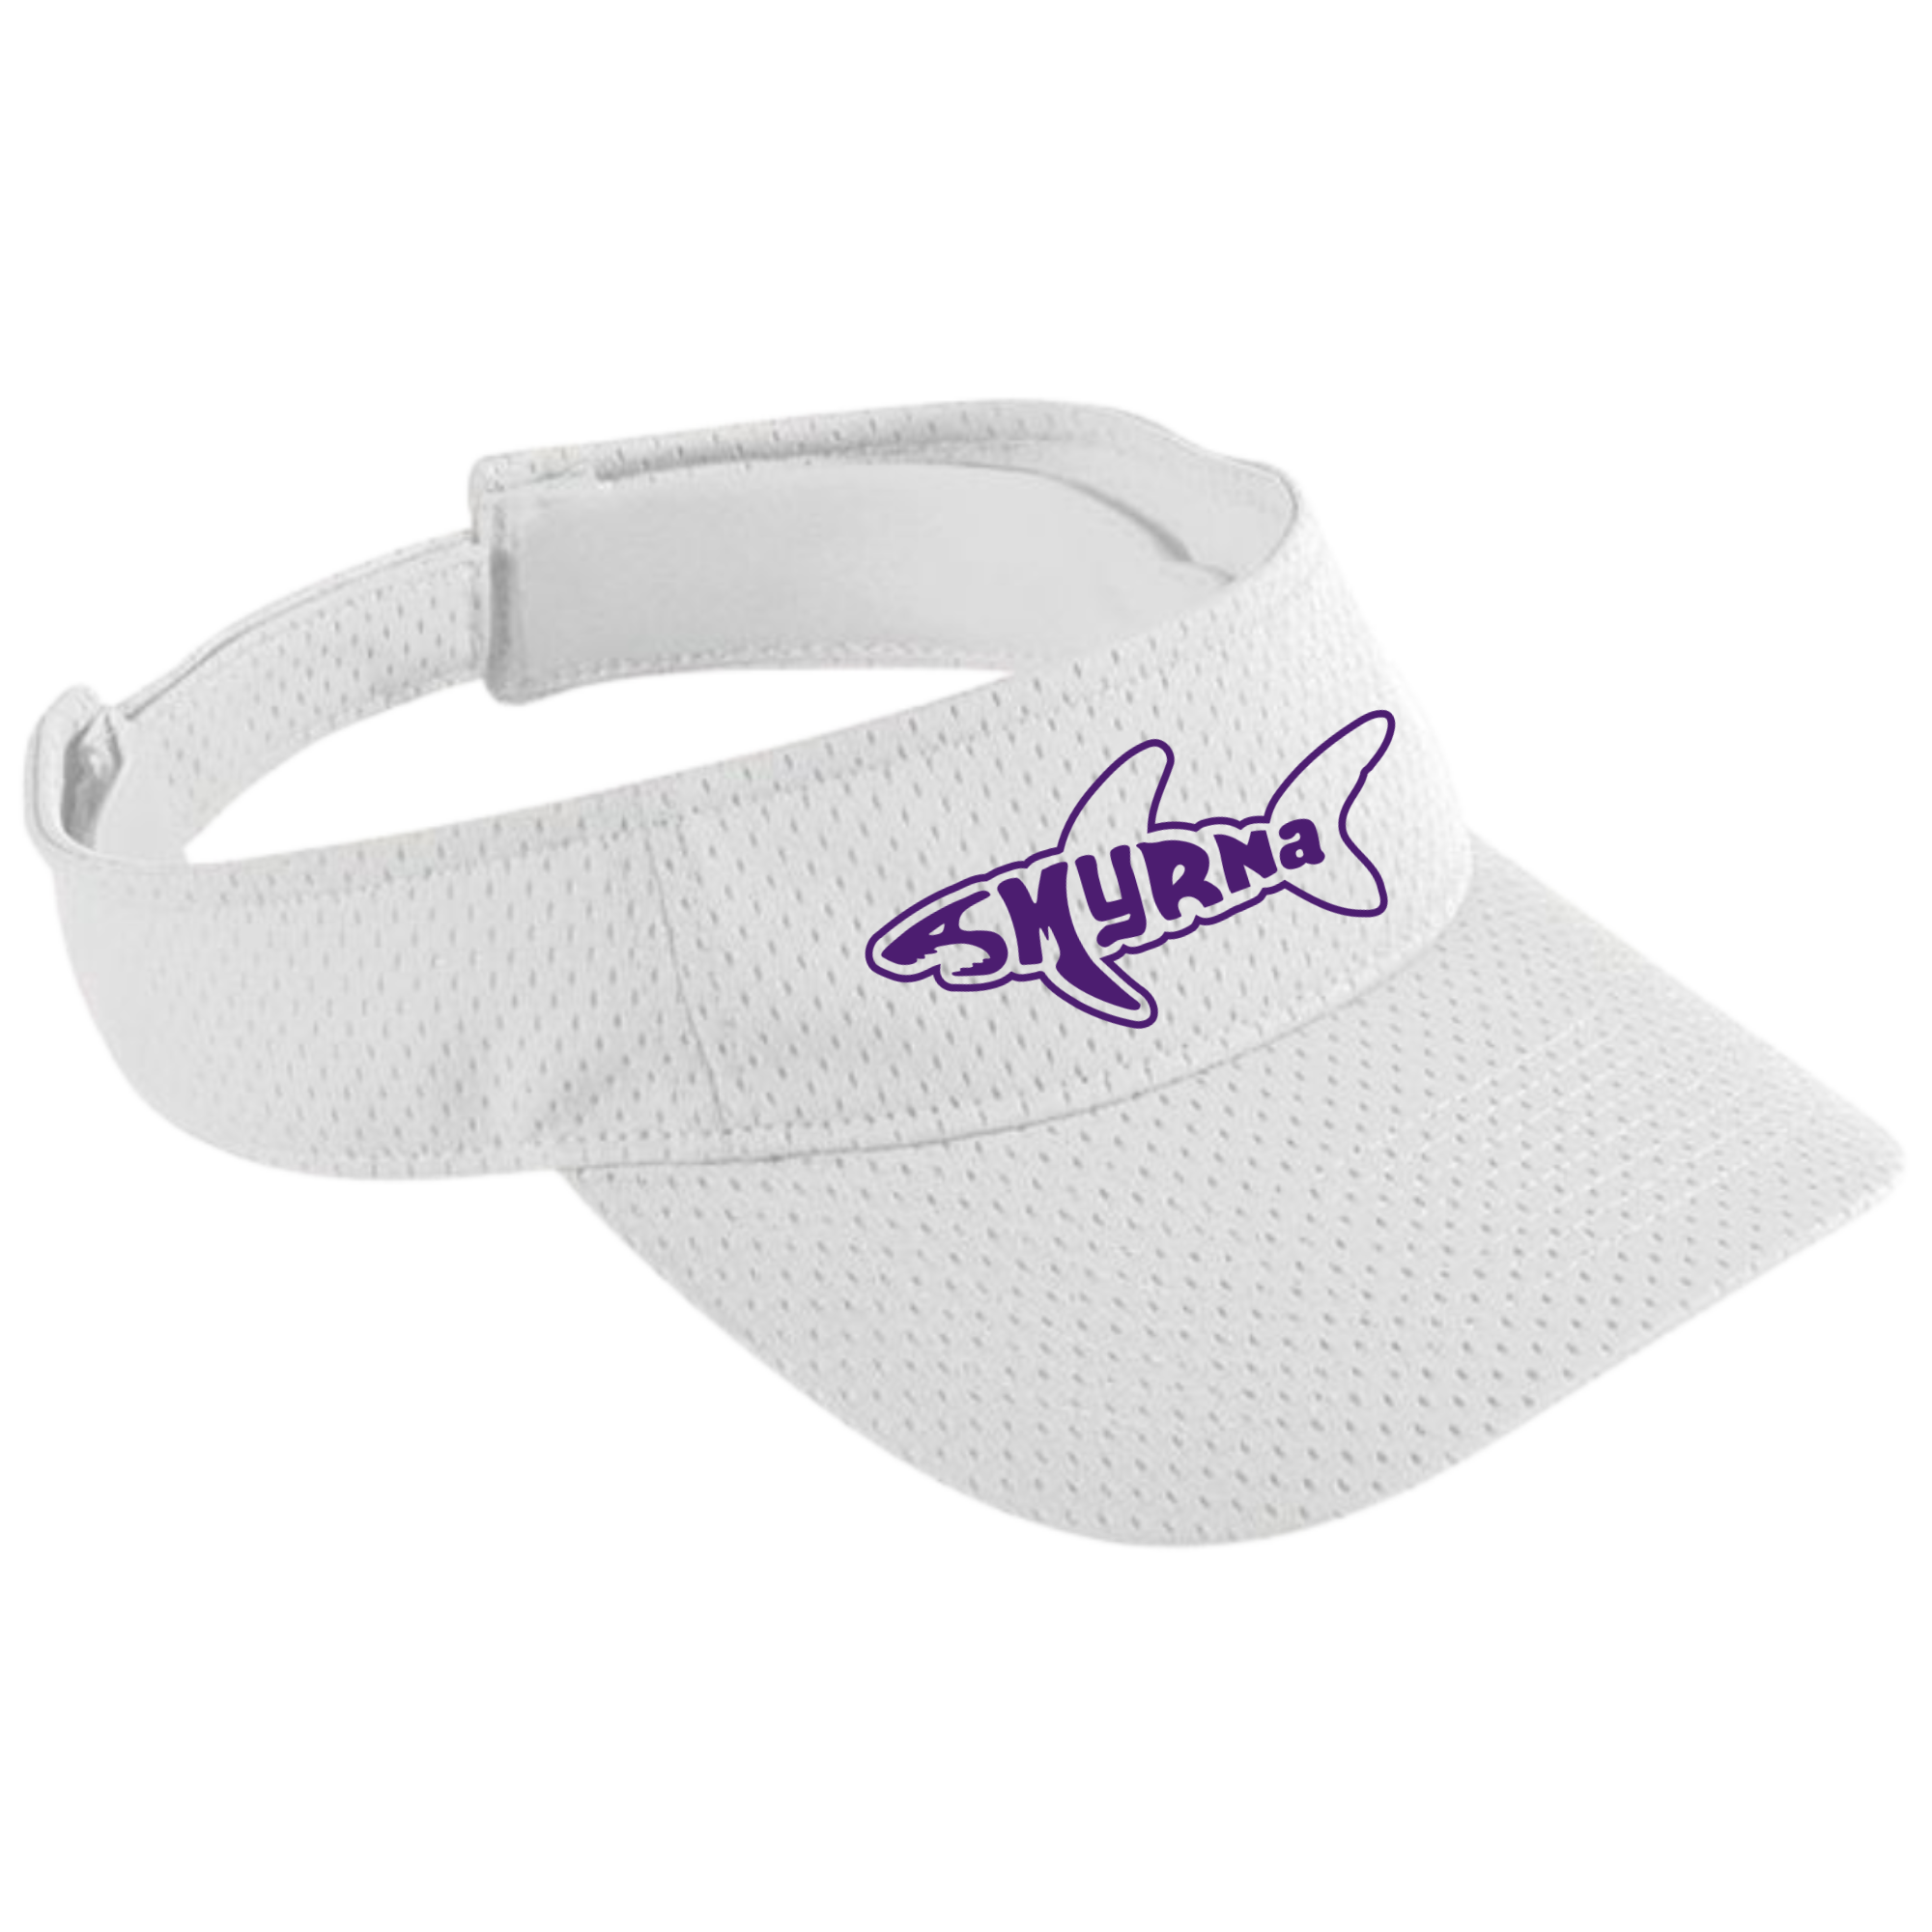 Athletic Mesh Visor (Customized) - Smyrna Sharks